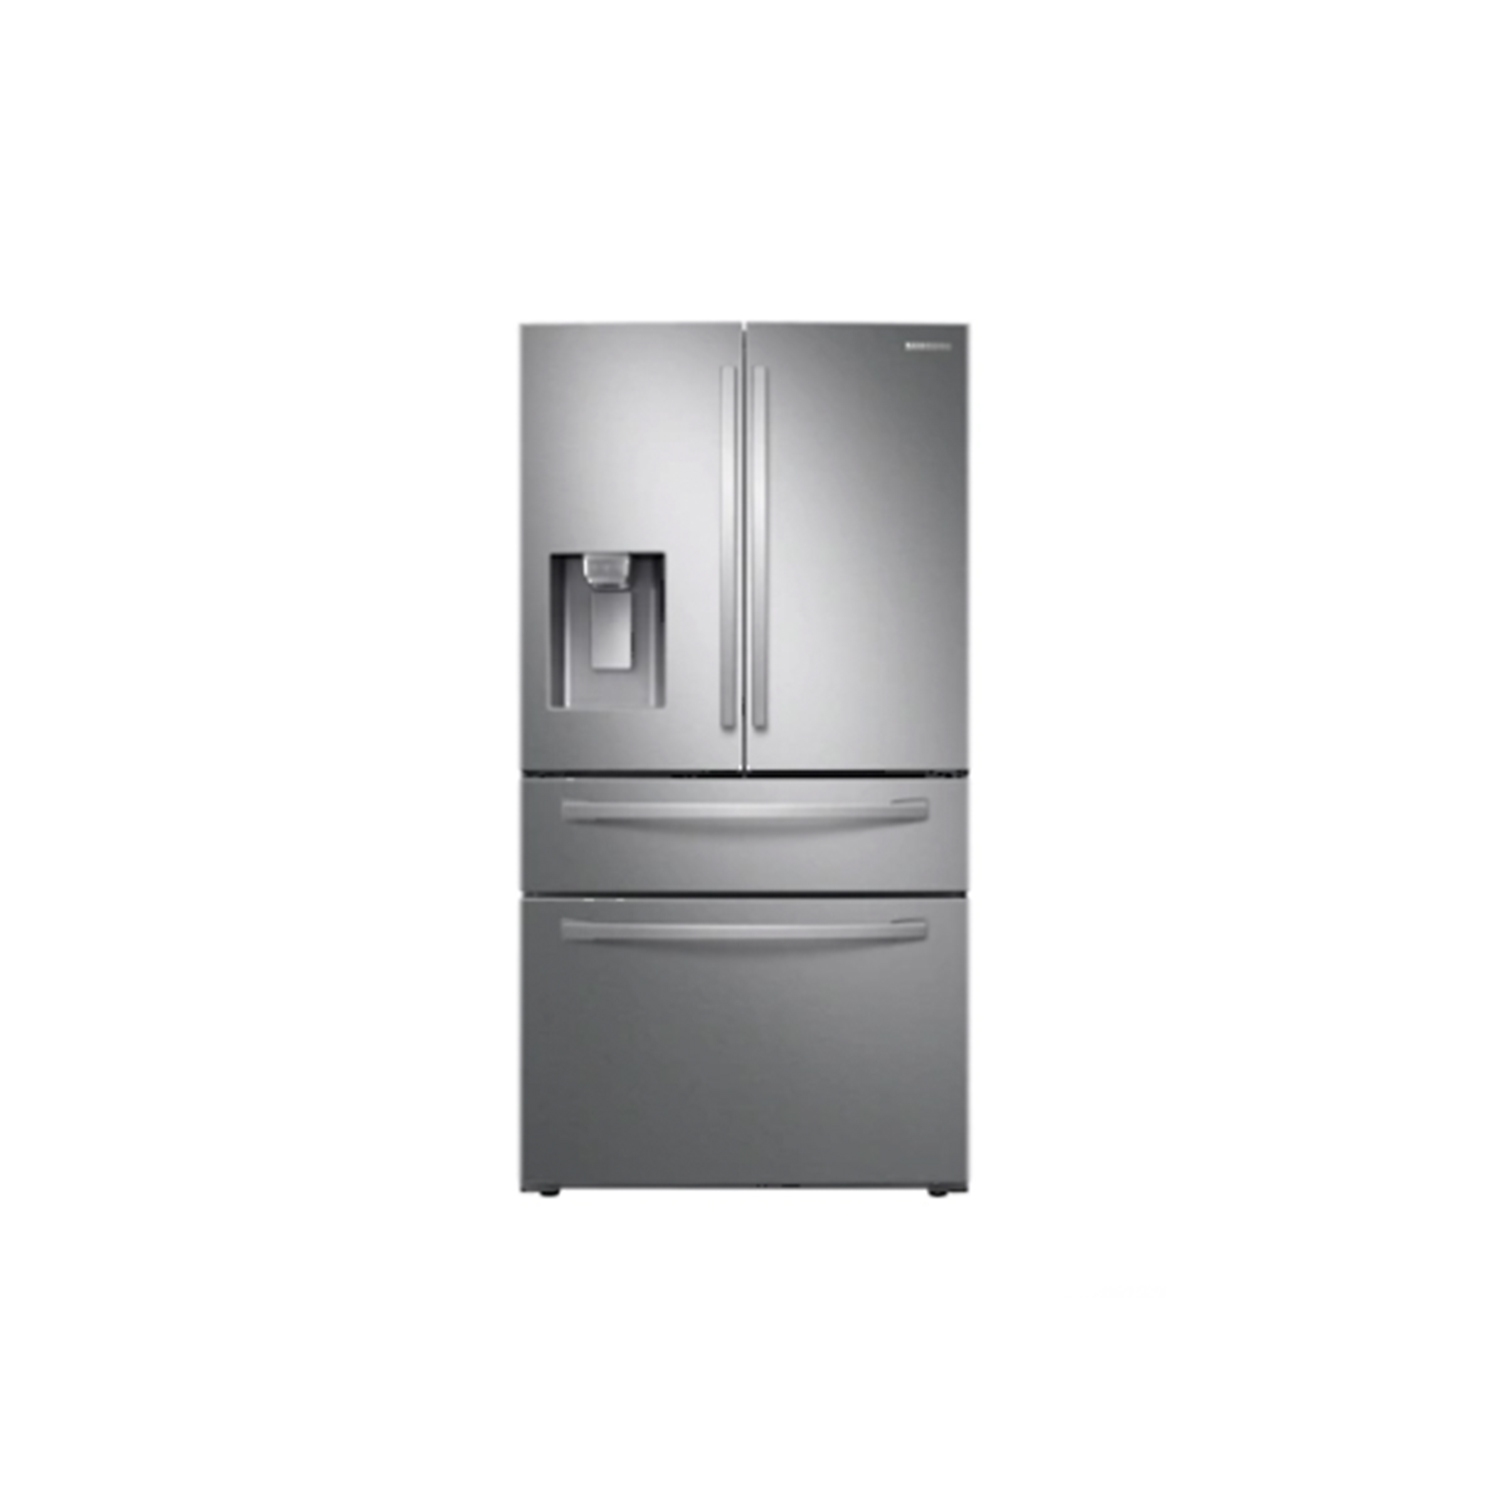 Samsung RF24R7201SR American Style Fridge Freezer - Stainless Steel - Frost Free - 0